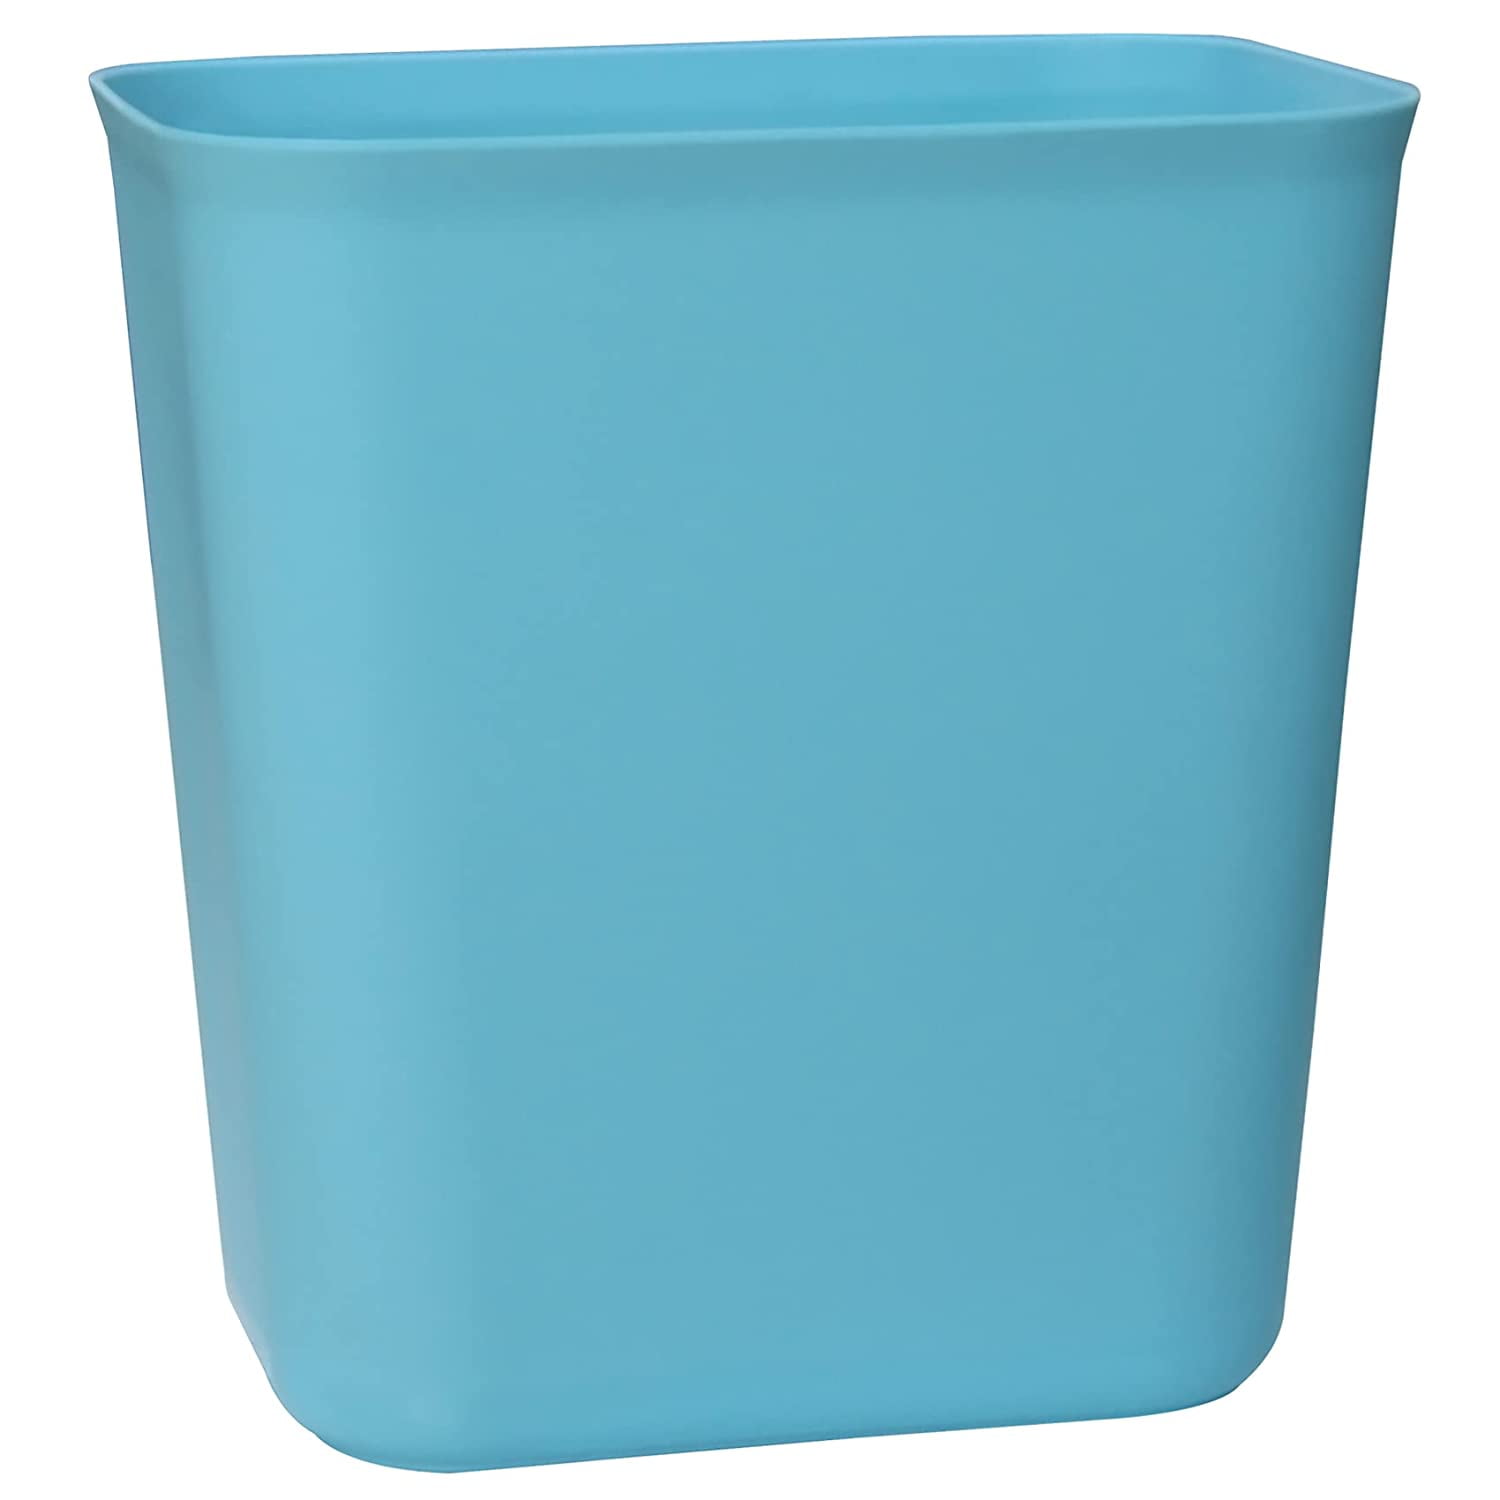  Teal Compost Bin Kitchen - 1.3 Gallon Turquoise